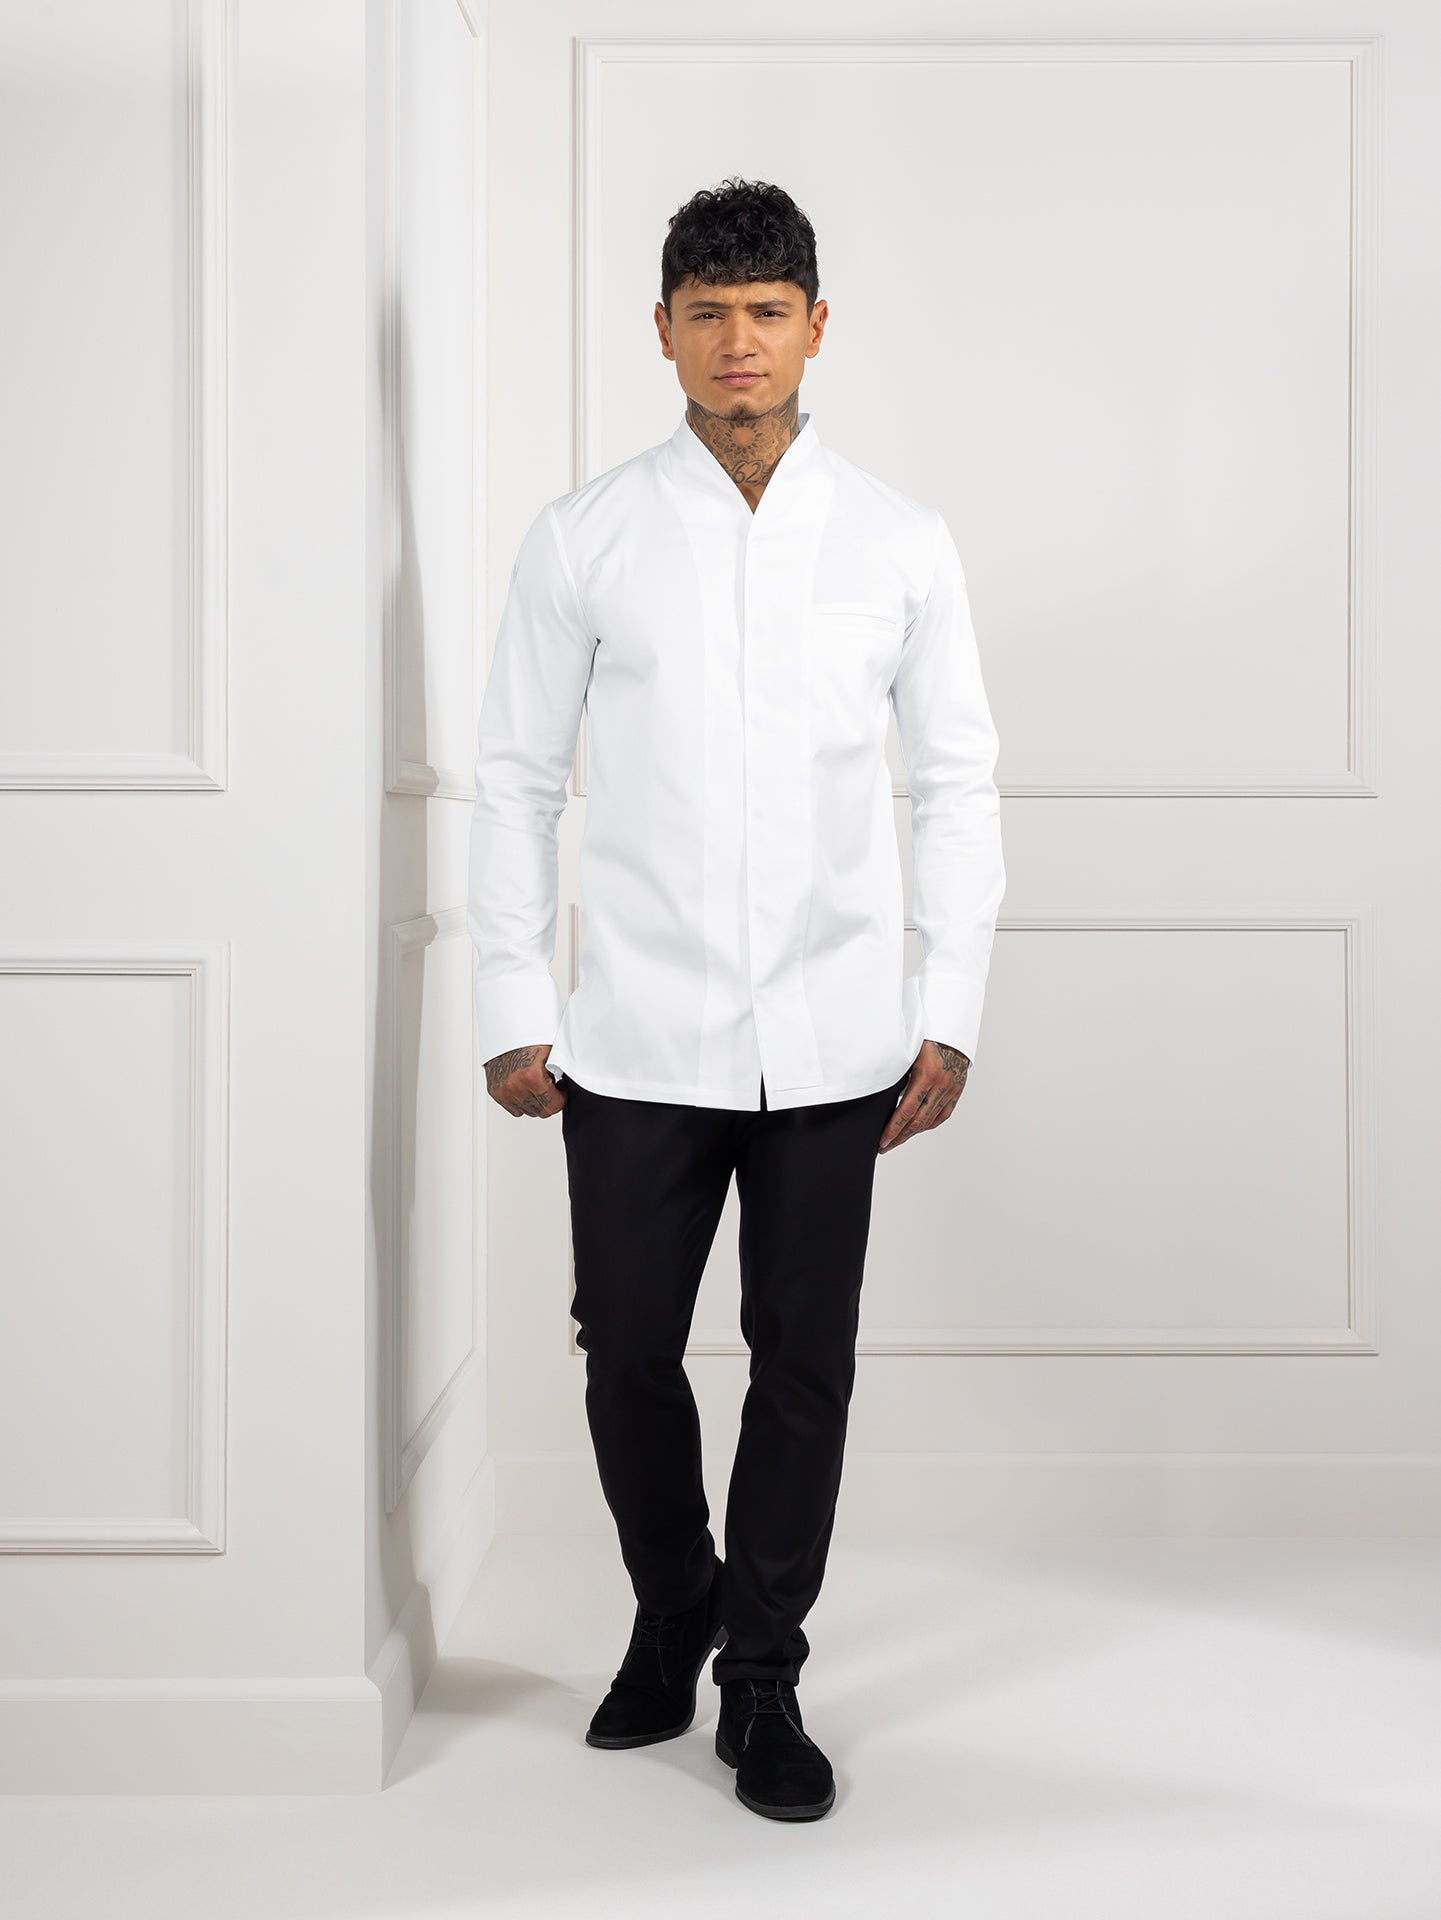 Chef Jacket Savio White by Le Nouveau Chef